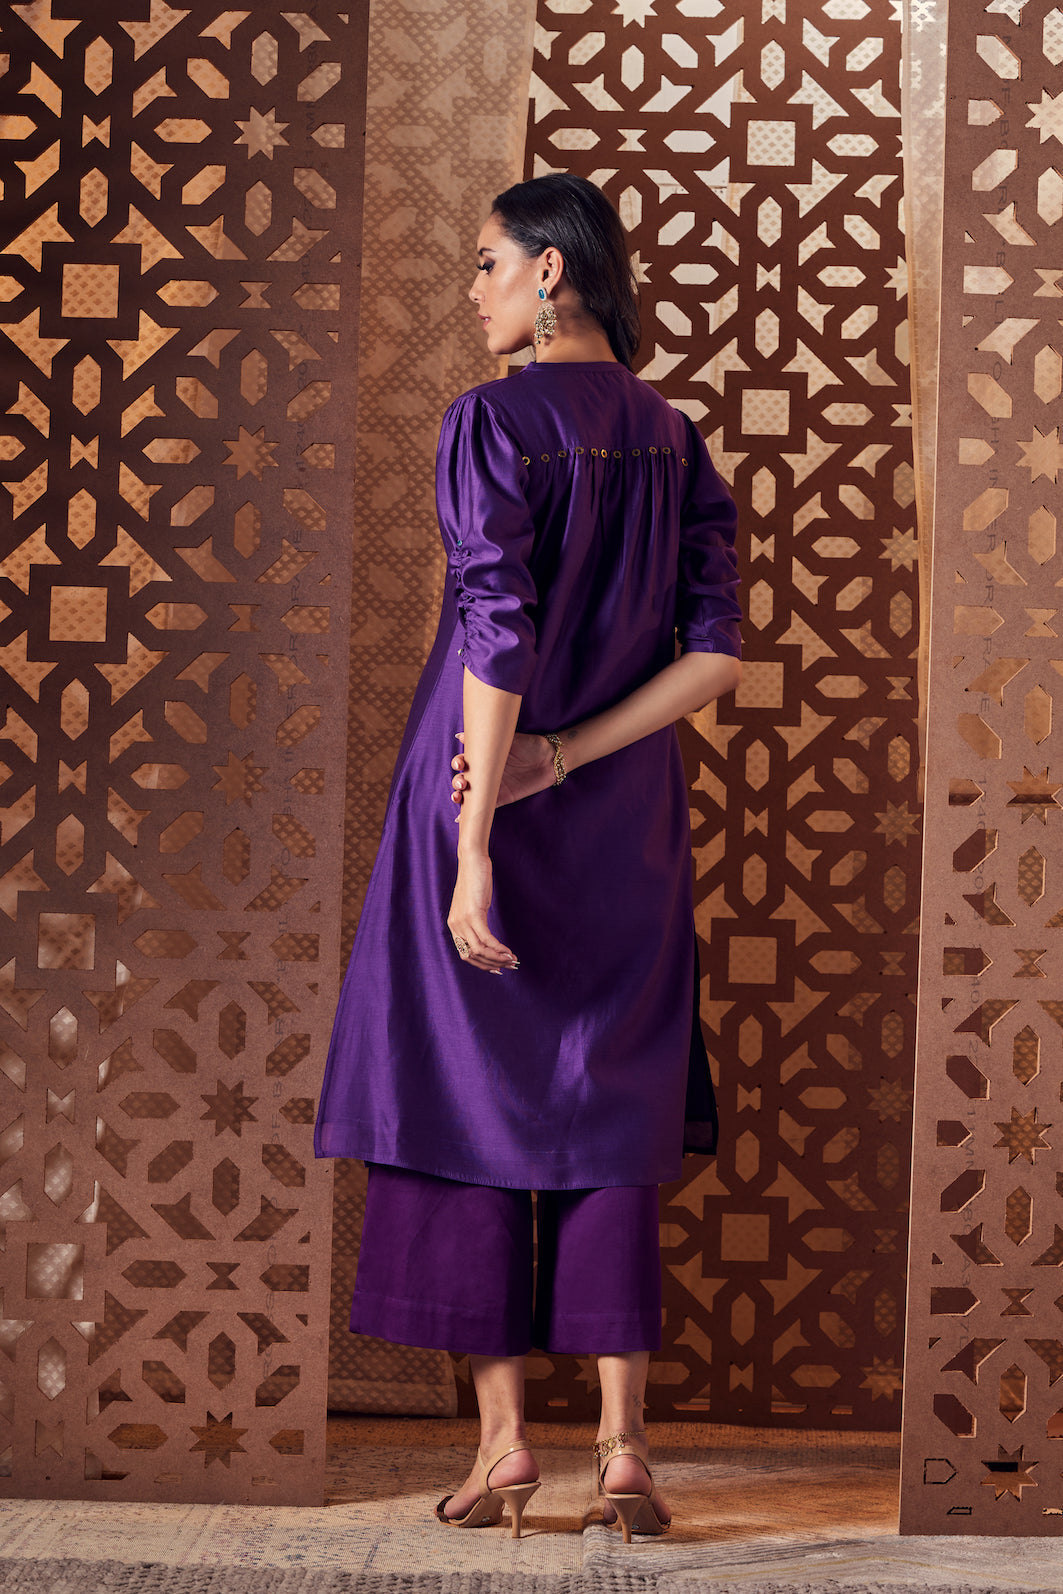 Chanderi A-Line Kurta - Set of 3 at Kamakhyaa by Charkhee. This item is Chanderi, Cotton, Embroidered, Ethnic Wear, Indian Wear, Kurta Palazzo Sets, Naayaab, Natural, Nayaab, Purple, Relaxed Fit, Wedding Gifts, Womenswear